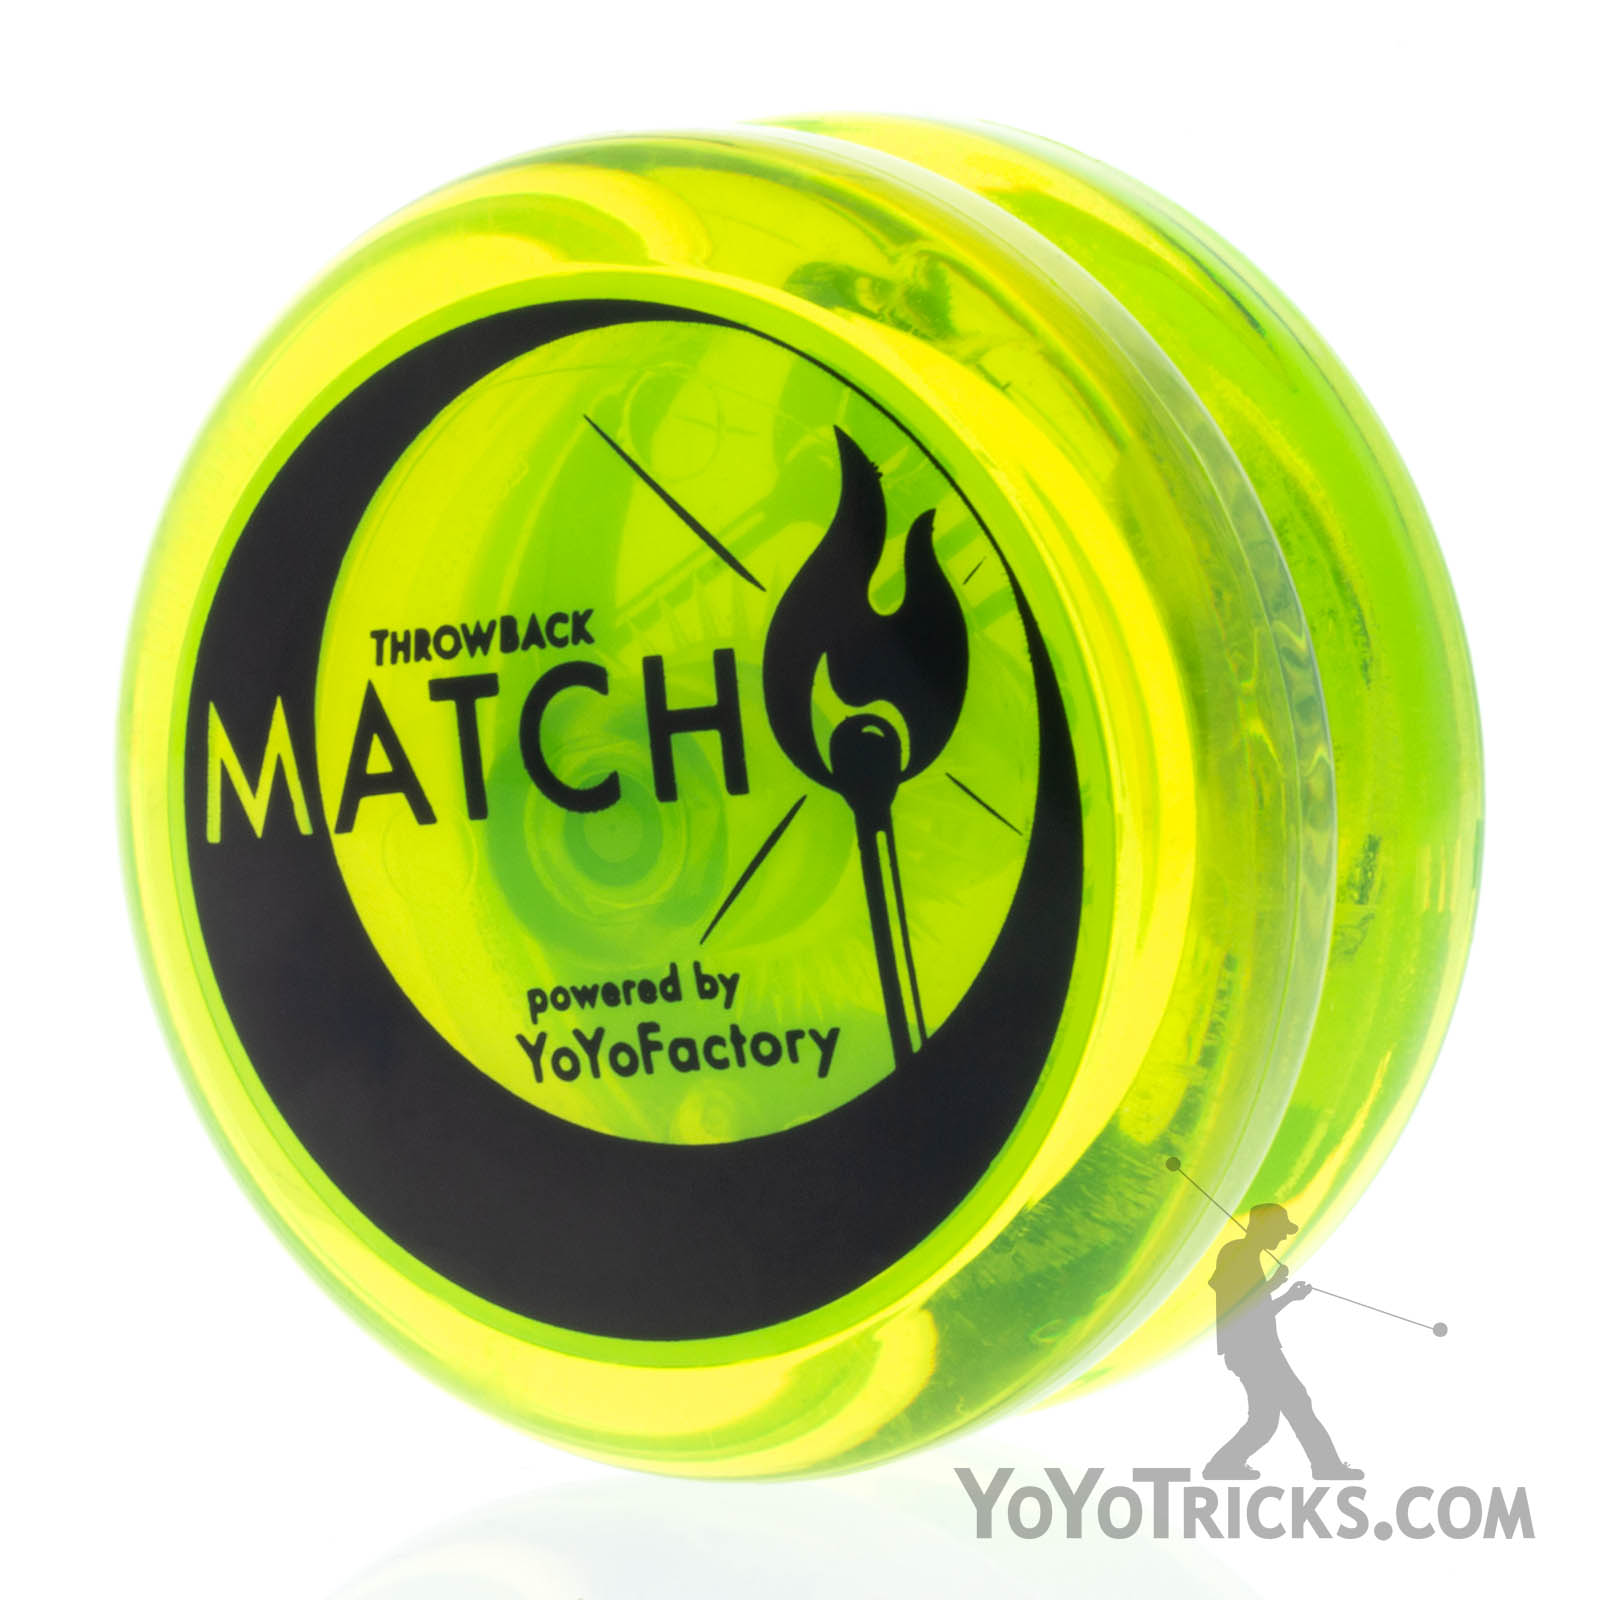 The Match Yoyo 